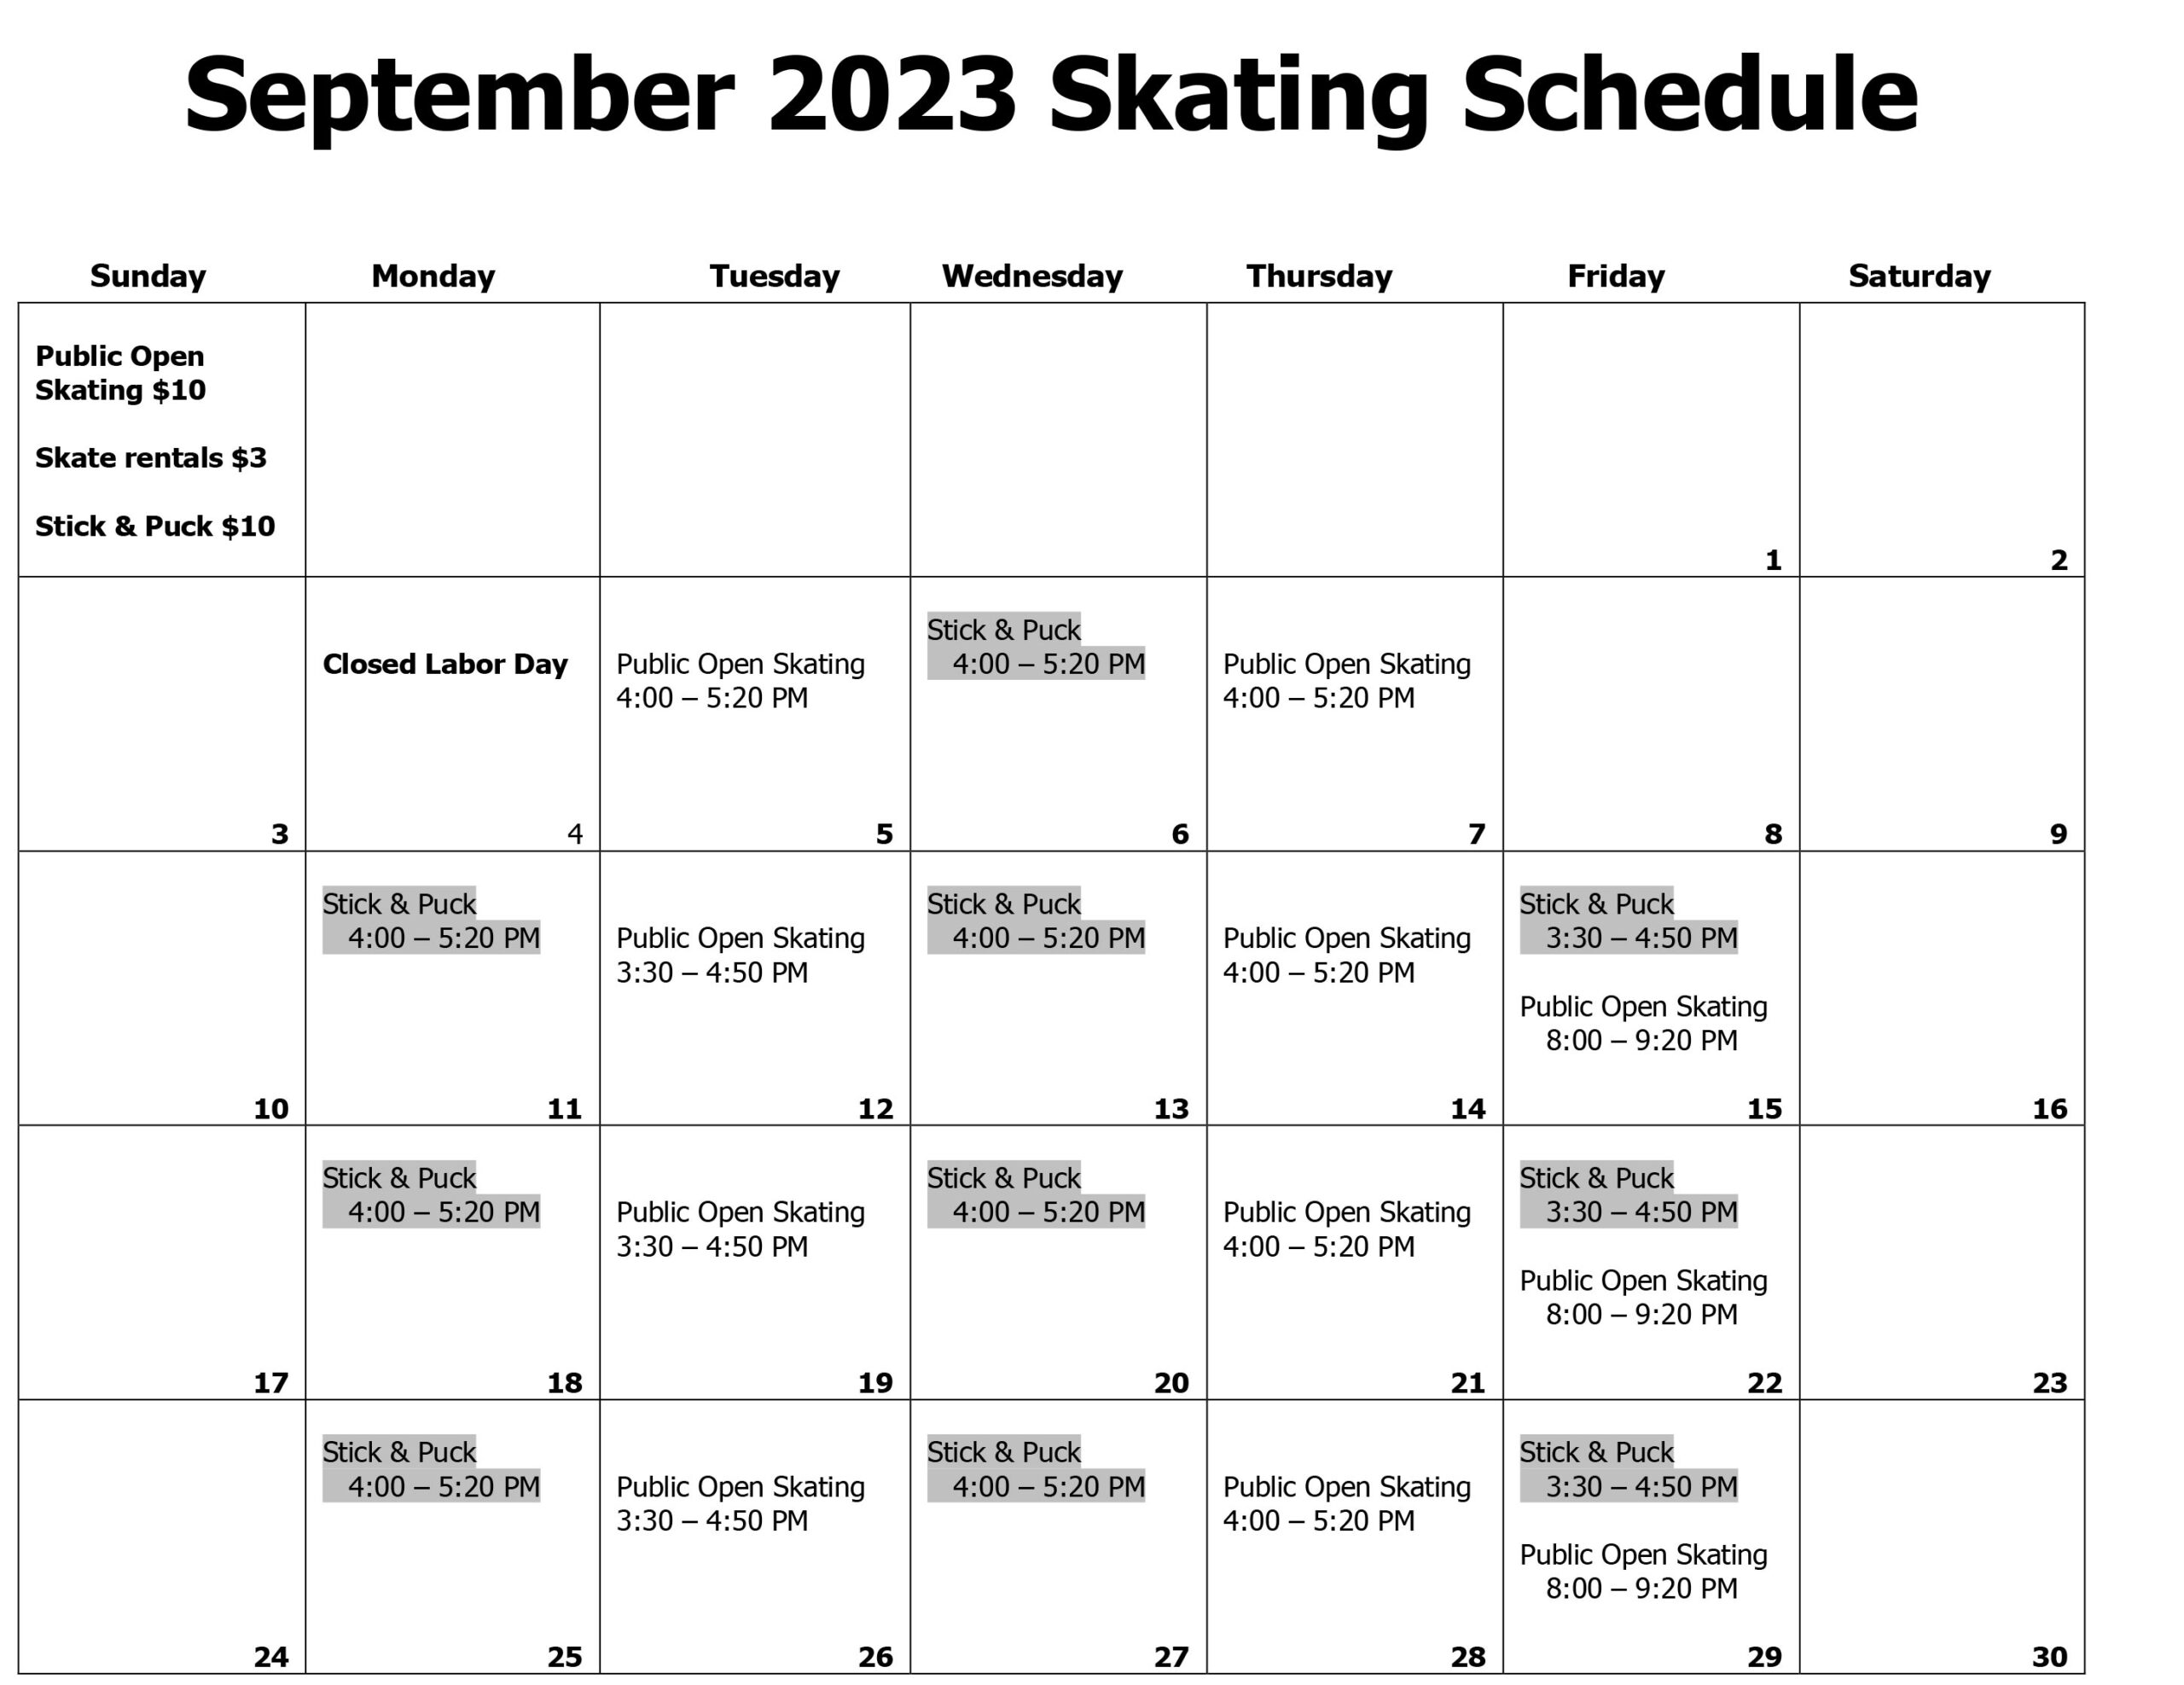 September Skating Schedule Posted